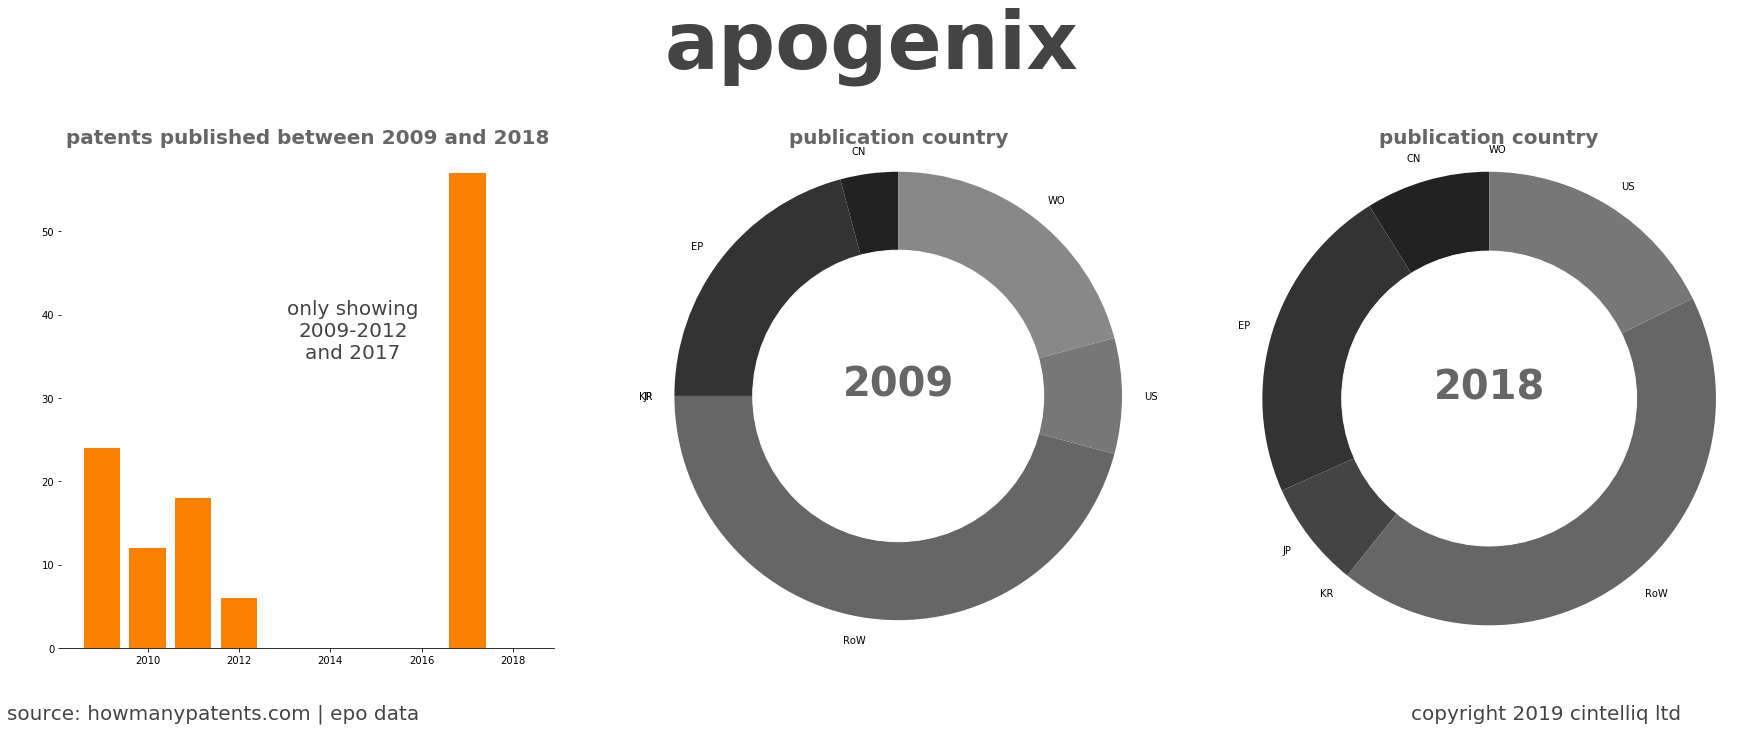 summary of patents for Apogenix